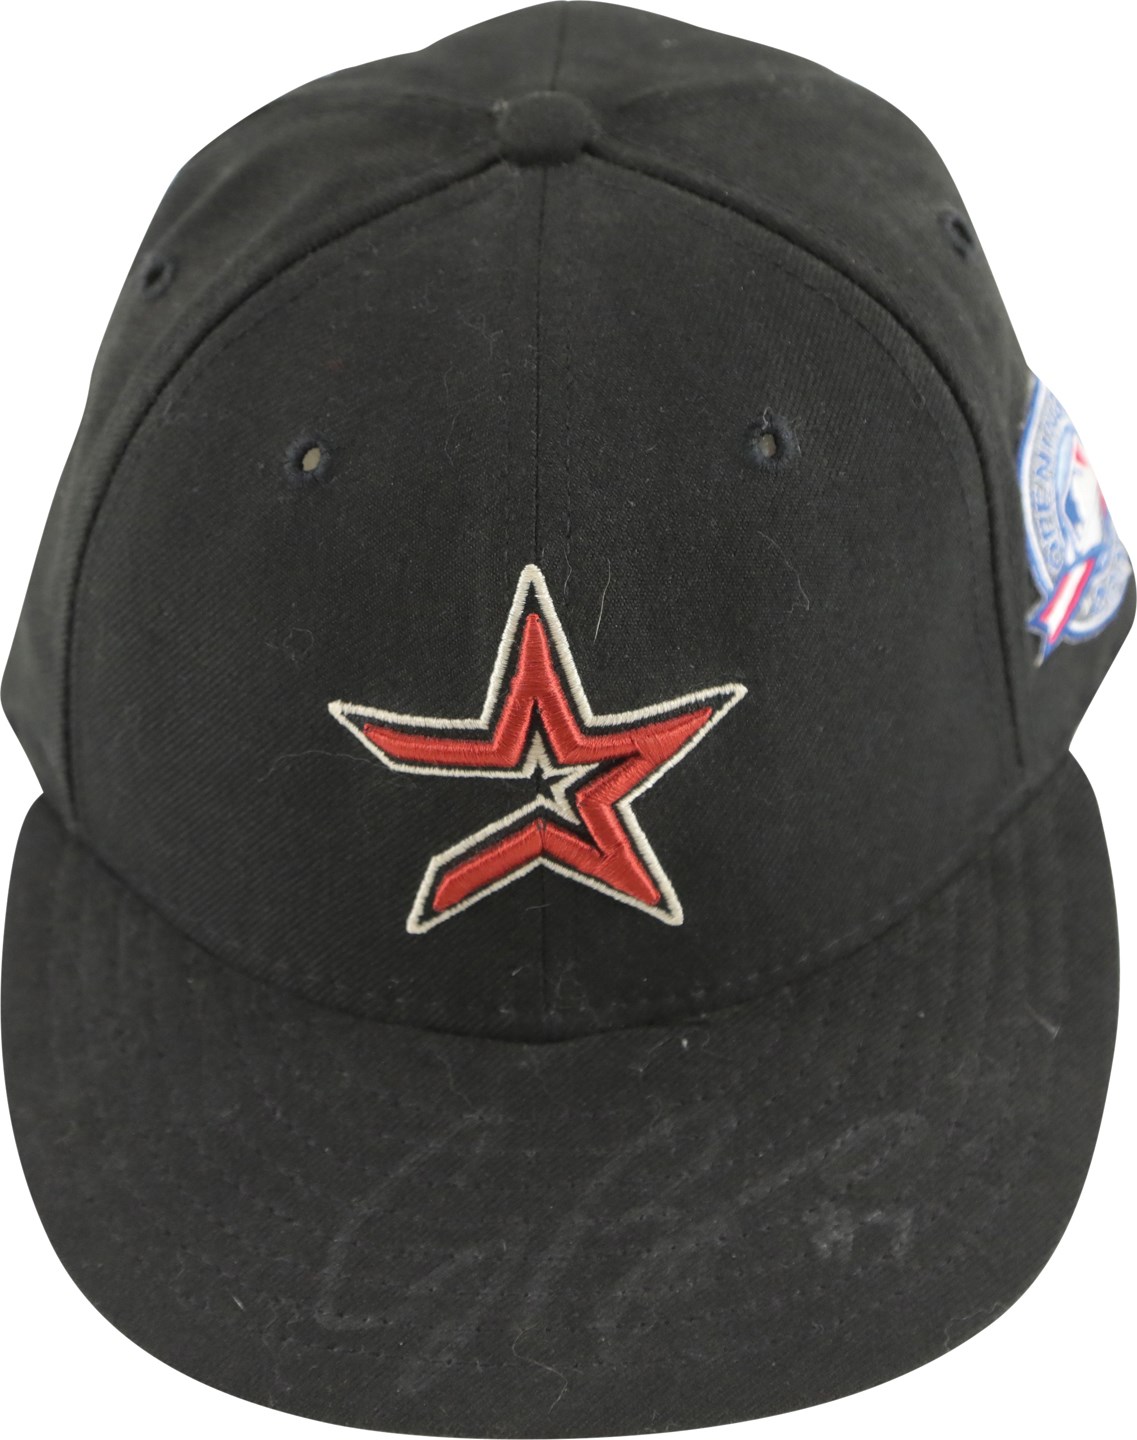 - 2004 Craig Biggio Opening Day Houston Astros Signed Hat